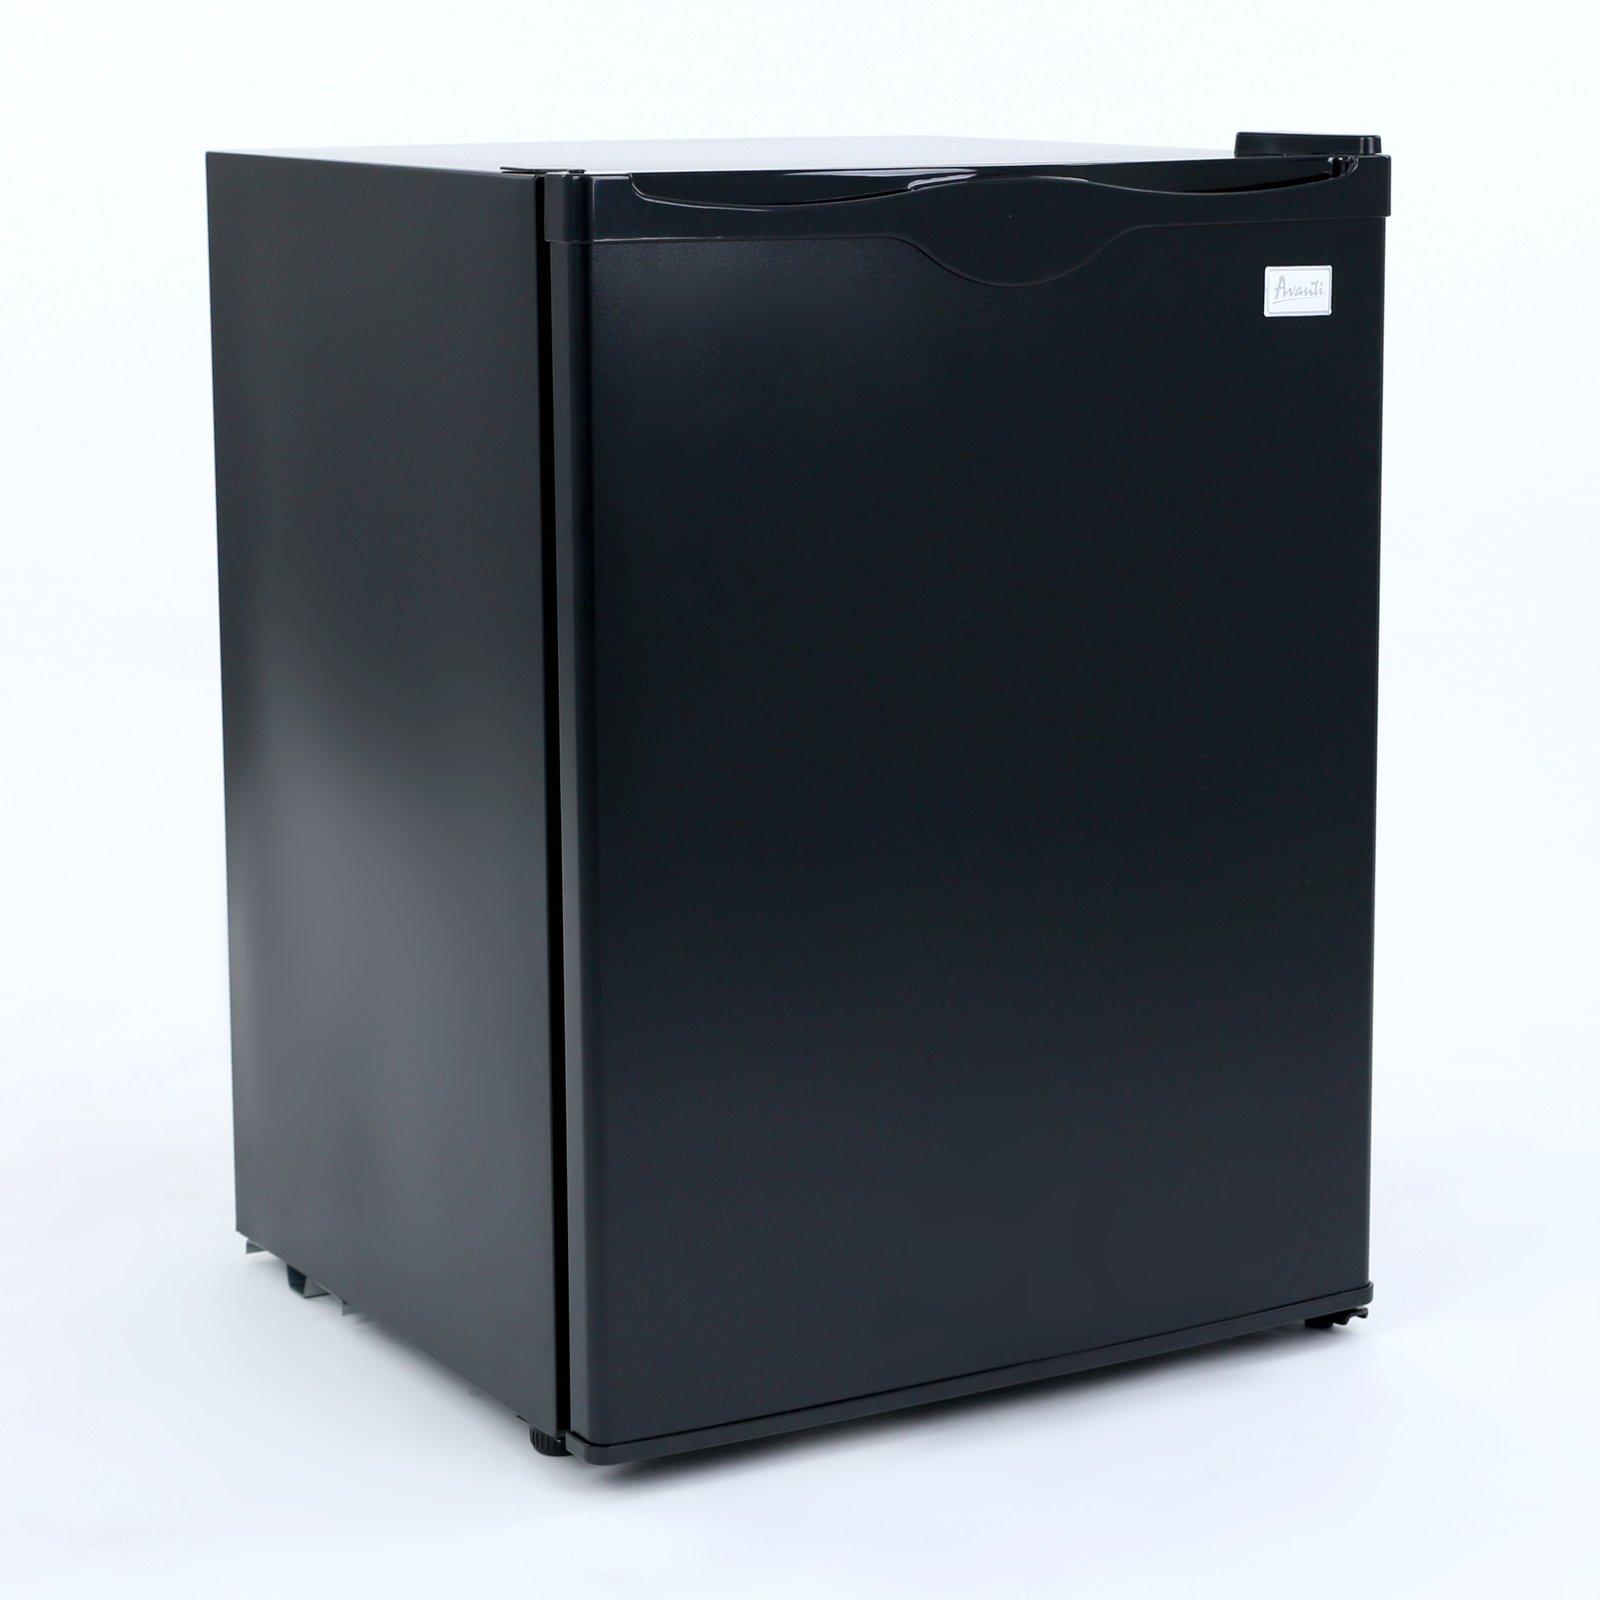 AVANTI AR2416B 2.2 cu. ft. Compact Refrigerator